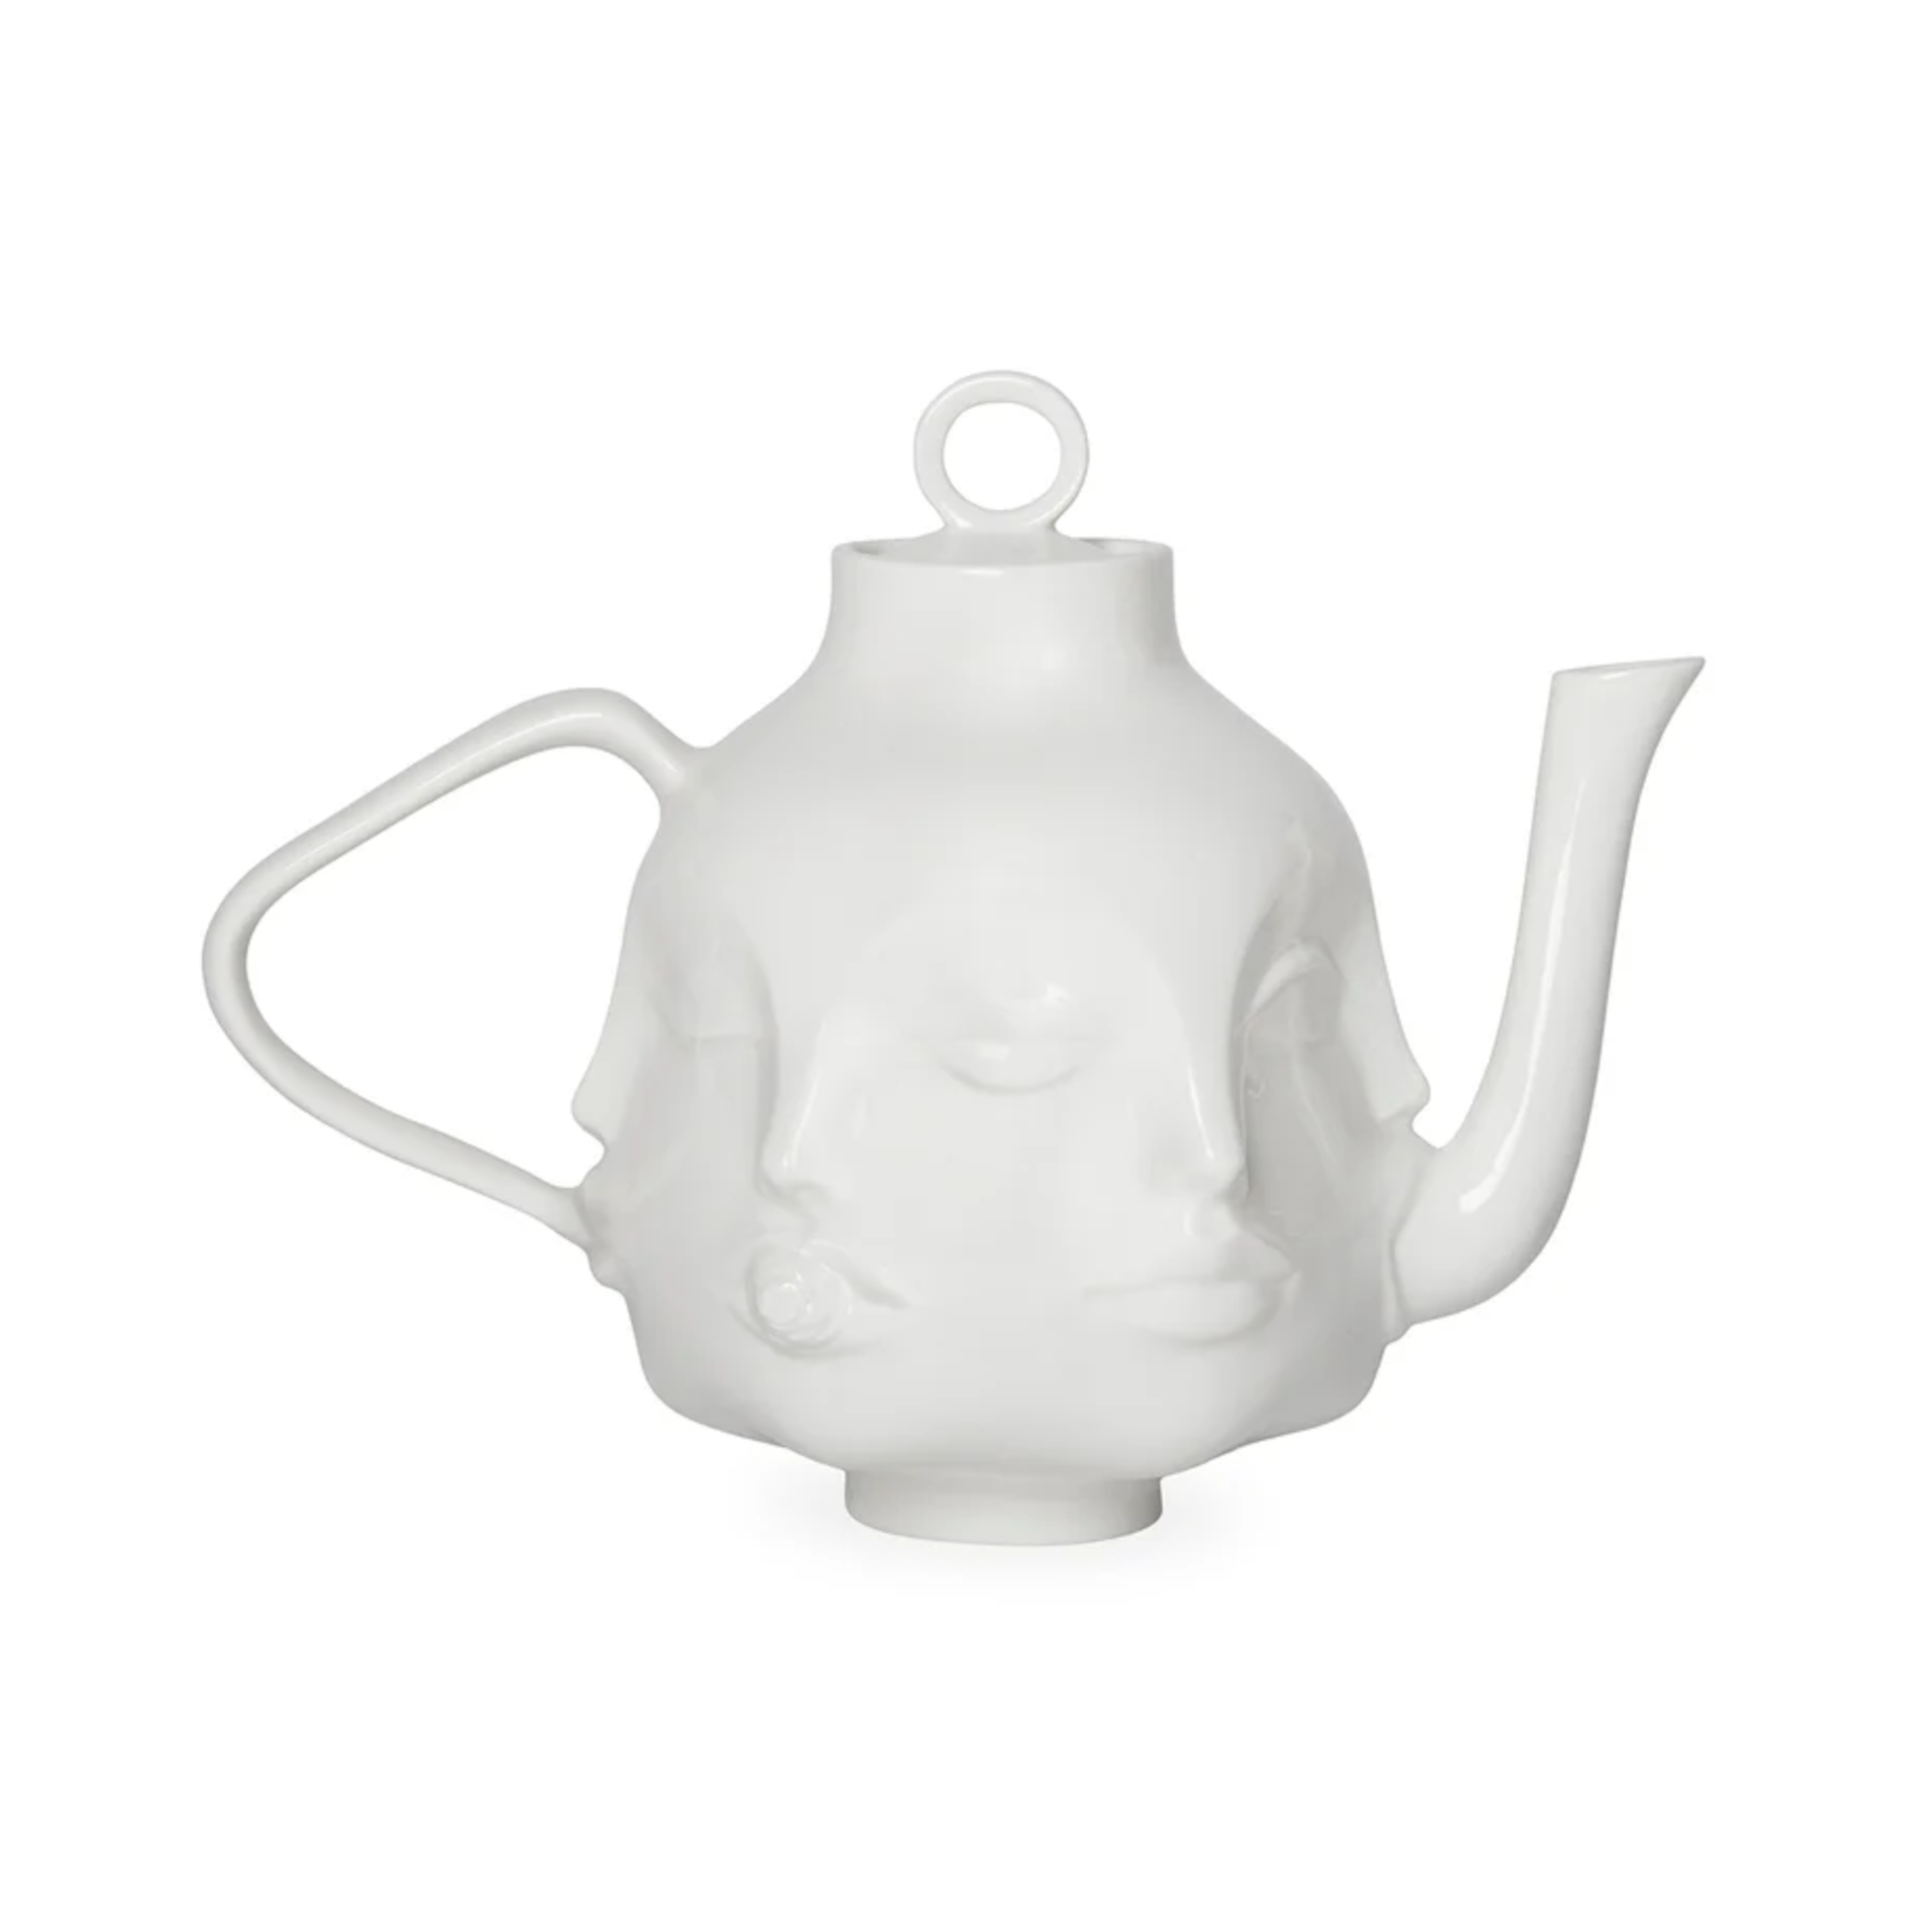 Teapot DORA MAAR made of porcelain